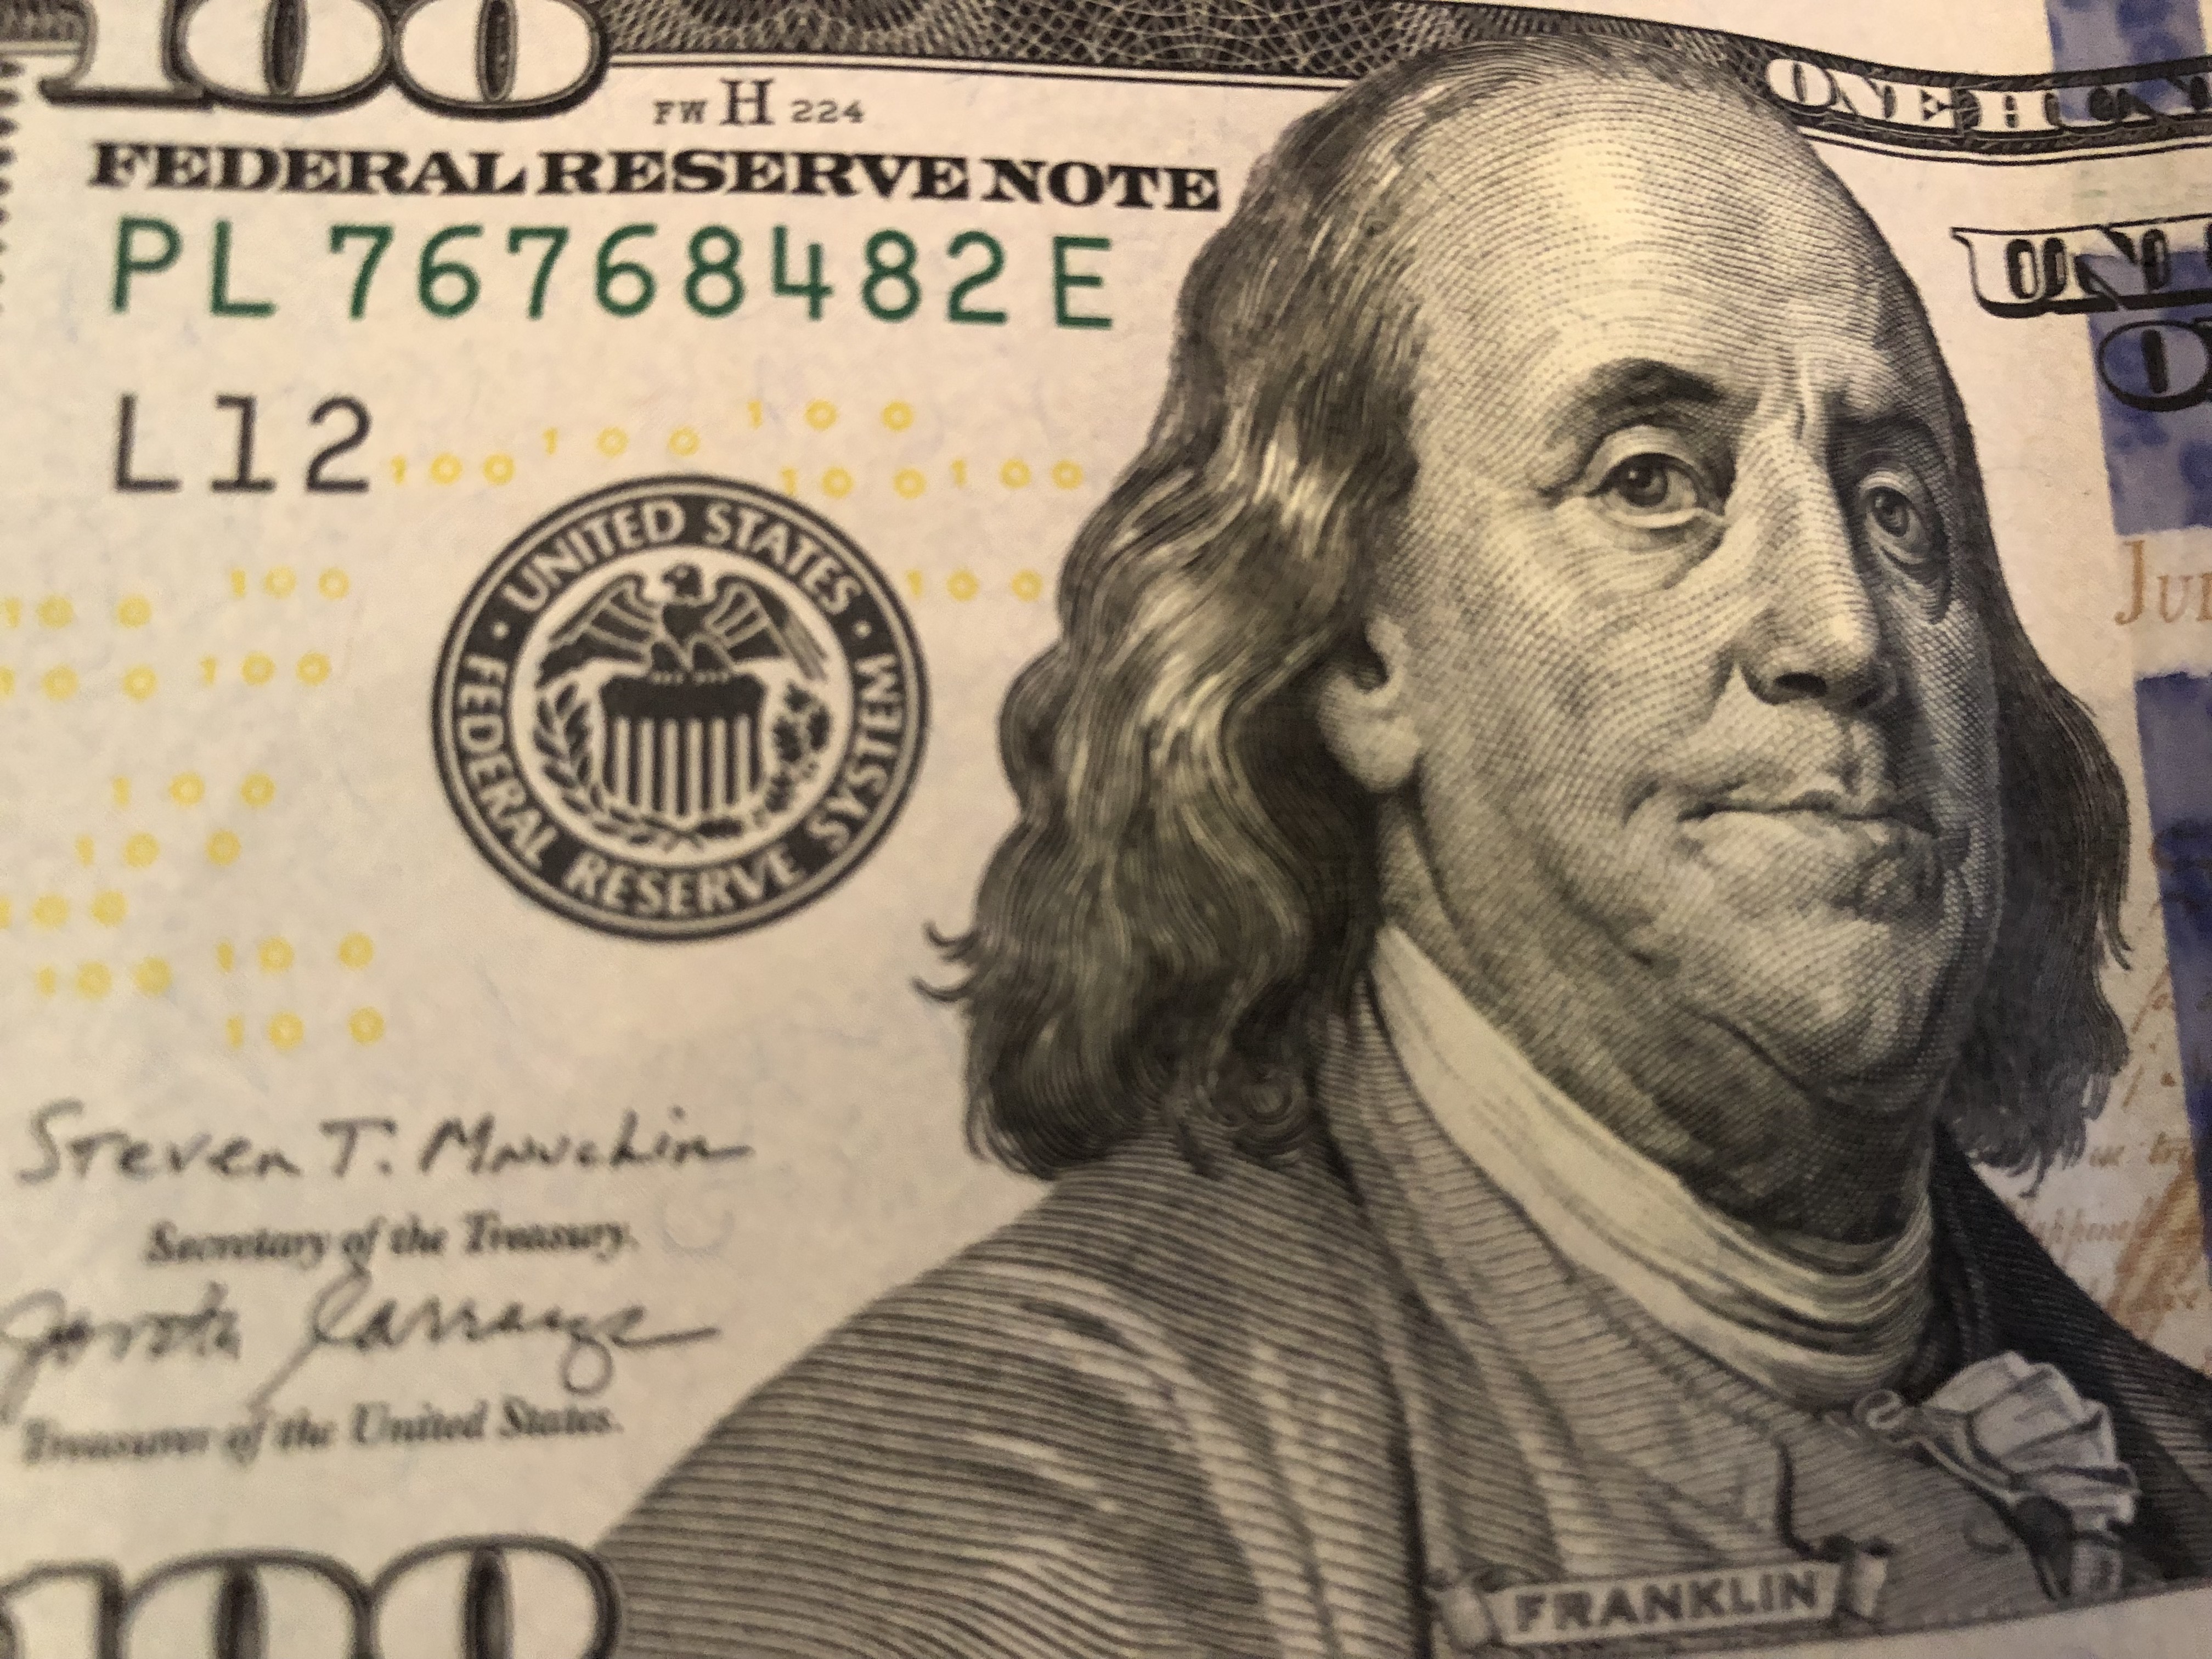 100 Dollar Bill. Photo by Dave Reid.